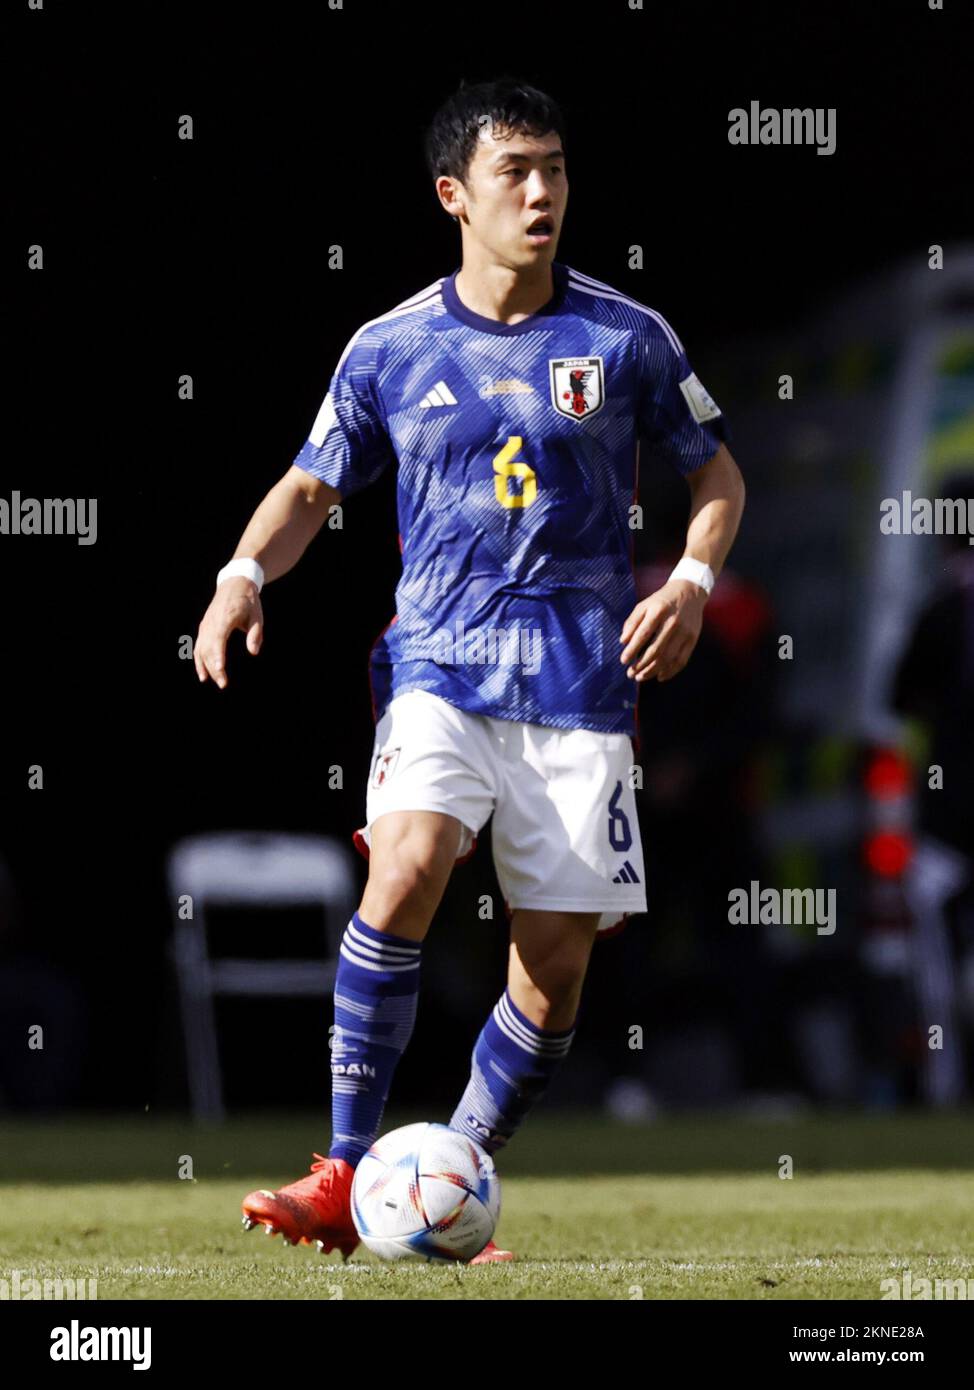 AL-RAYYAN - Wataru Endo of Japan during the FIFA World Cup Qatar 2022 group E match between Japan and Costa Rica at Ahmad Bin Ali Stadium on November 27, 2022 in Al-Rayyan, Qatar. AP | Dutch Height | MAURICE OF STONE Stock Photo